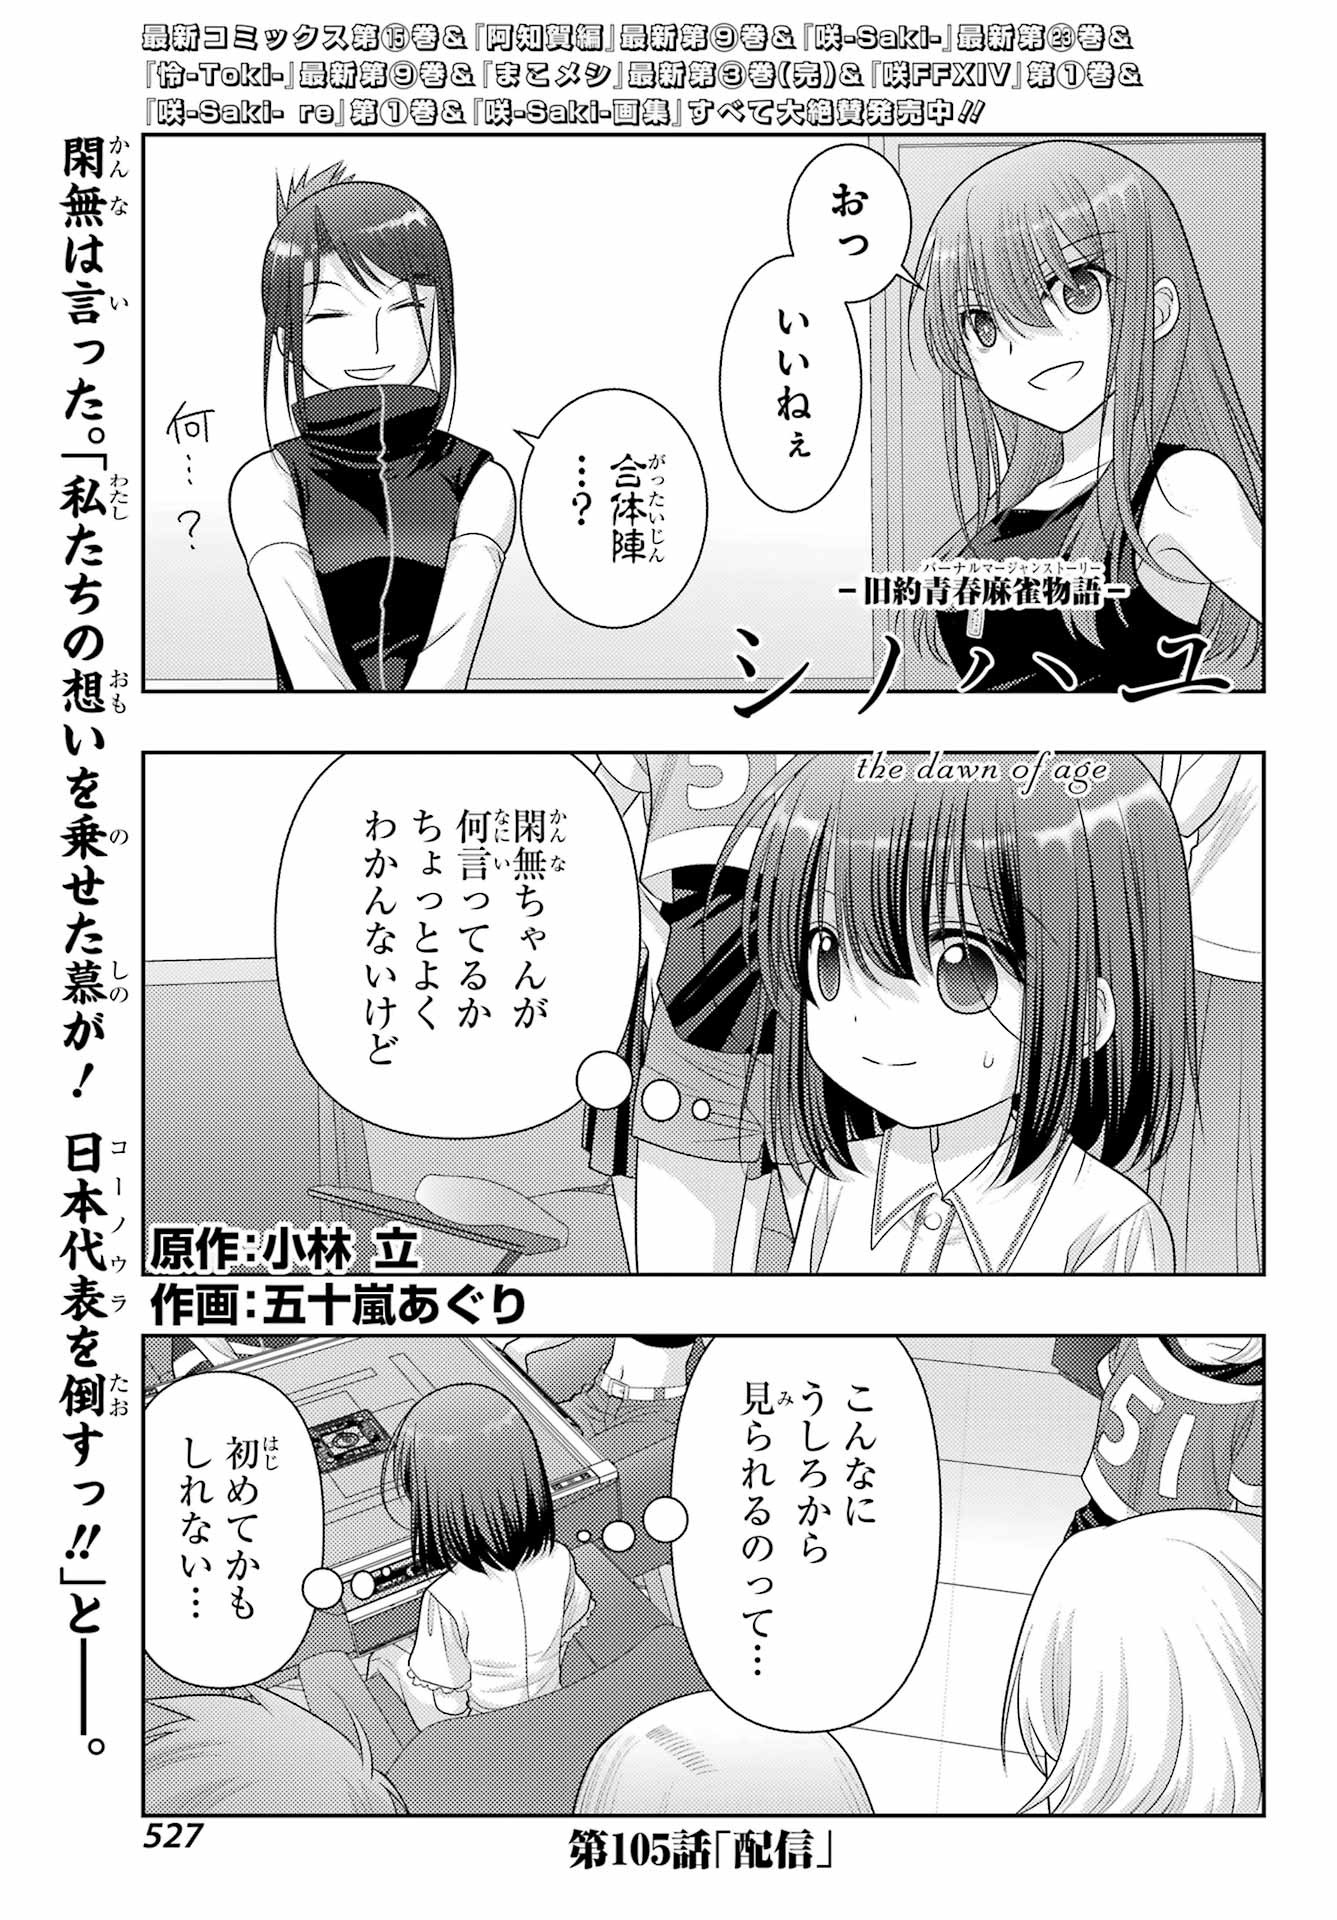 Shinohayu - The Dawn of Age Manga - Chapter 105 - Page 1